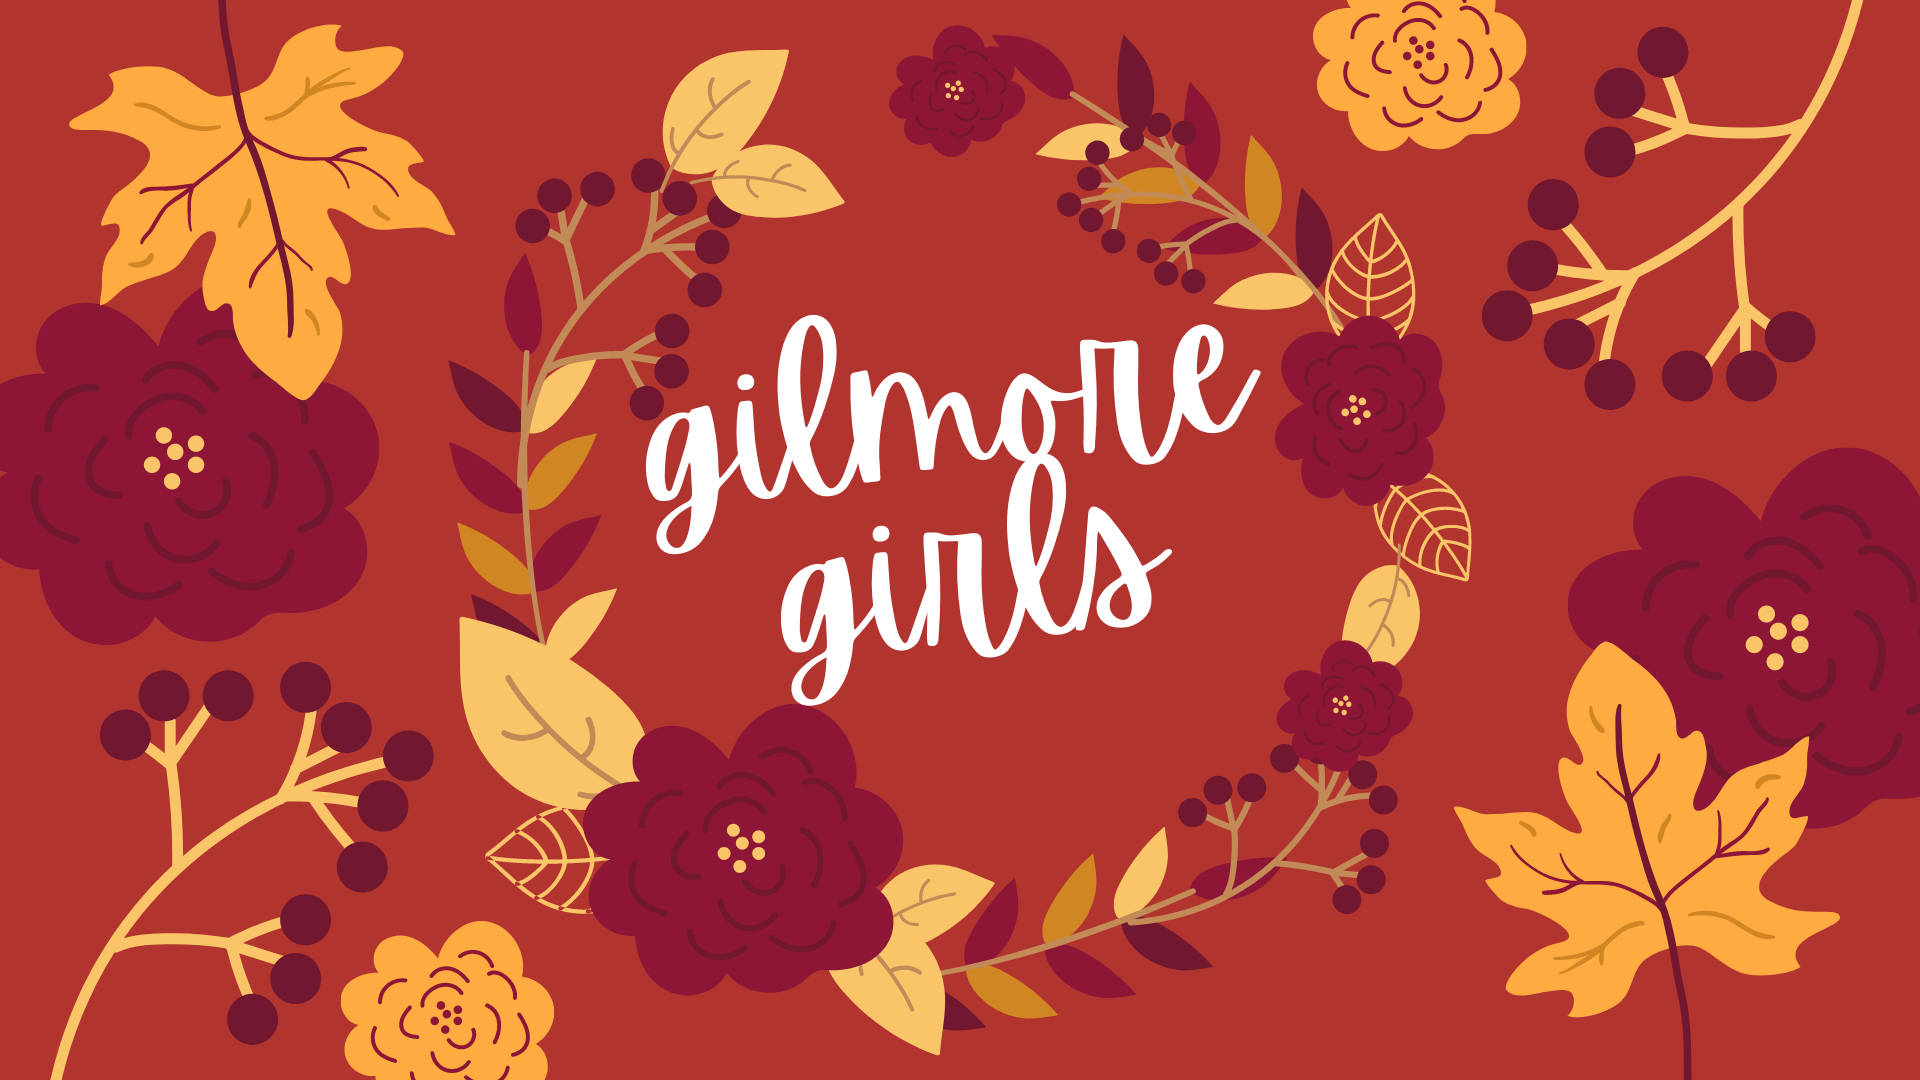 Thanksgiving Gilmore Girls Poster Wallpaper